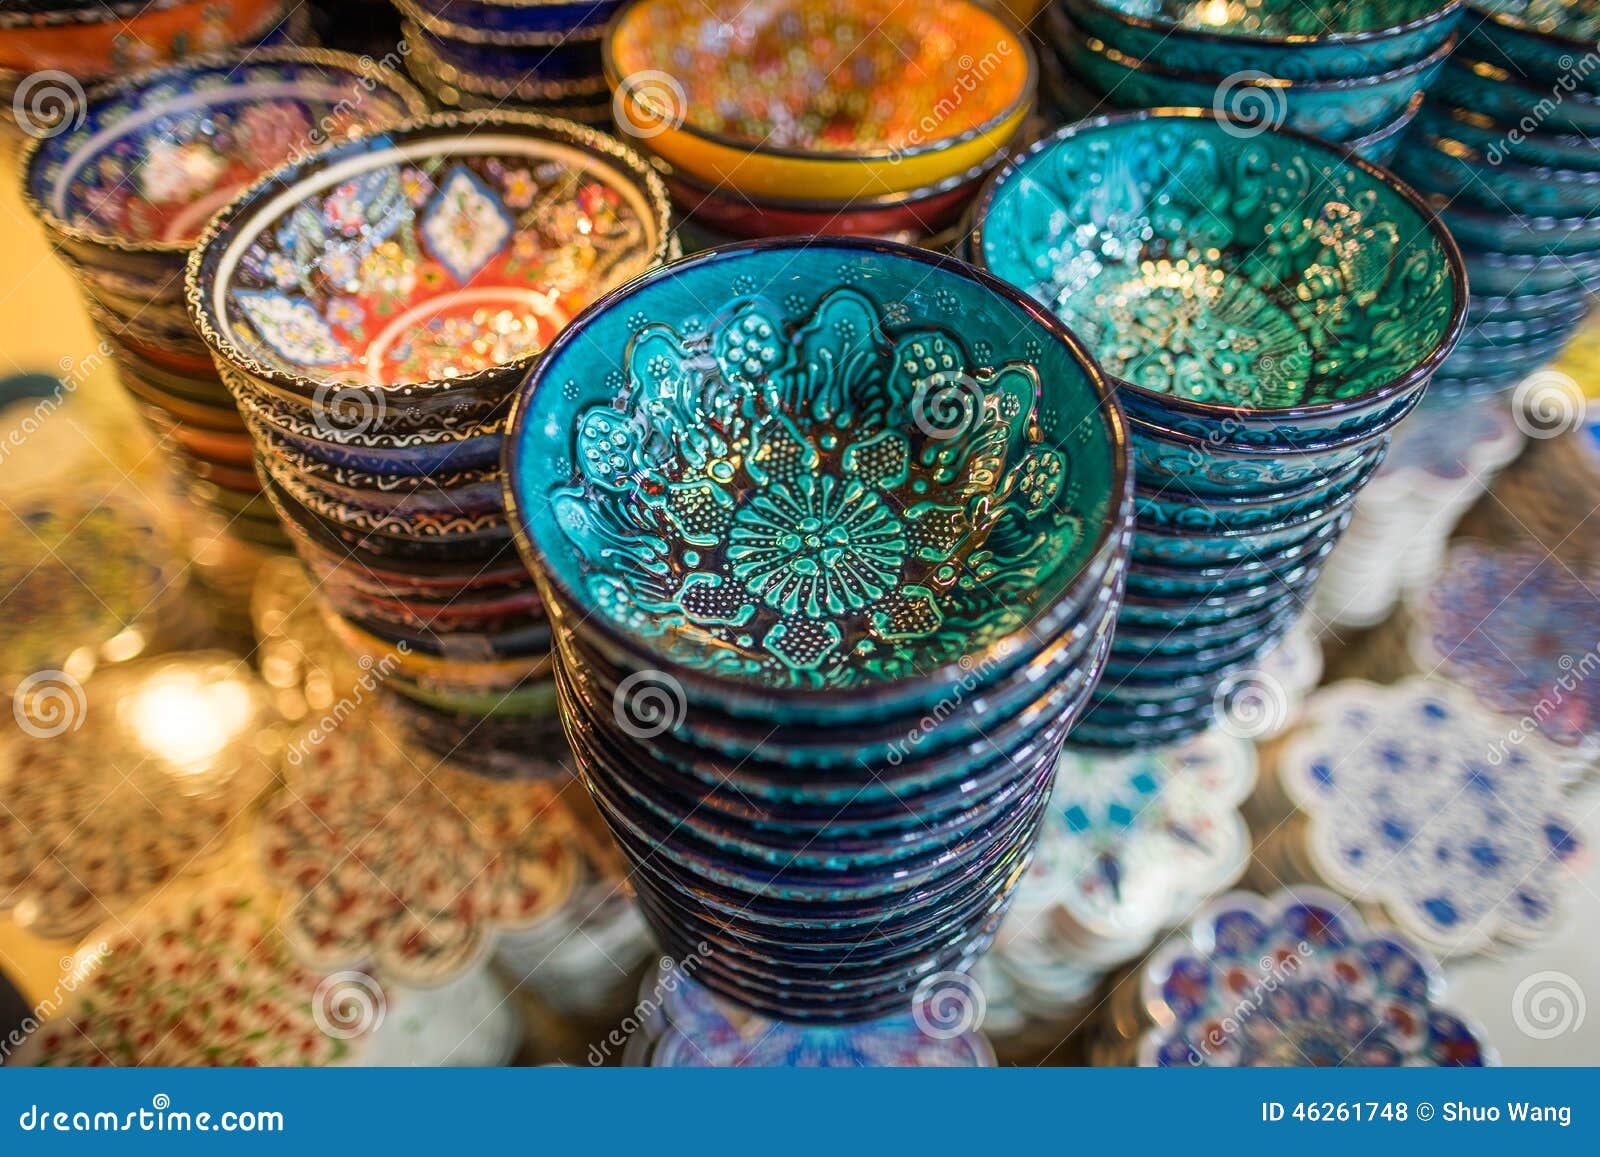 turkish chinaware in grand bazaar